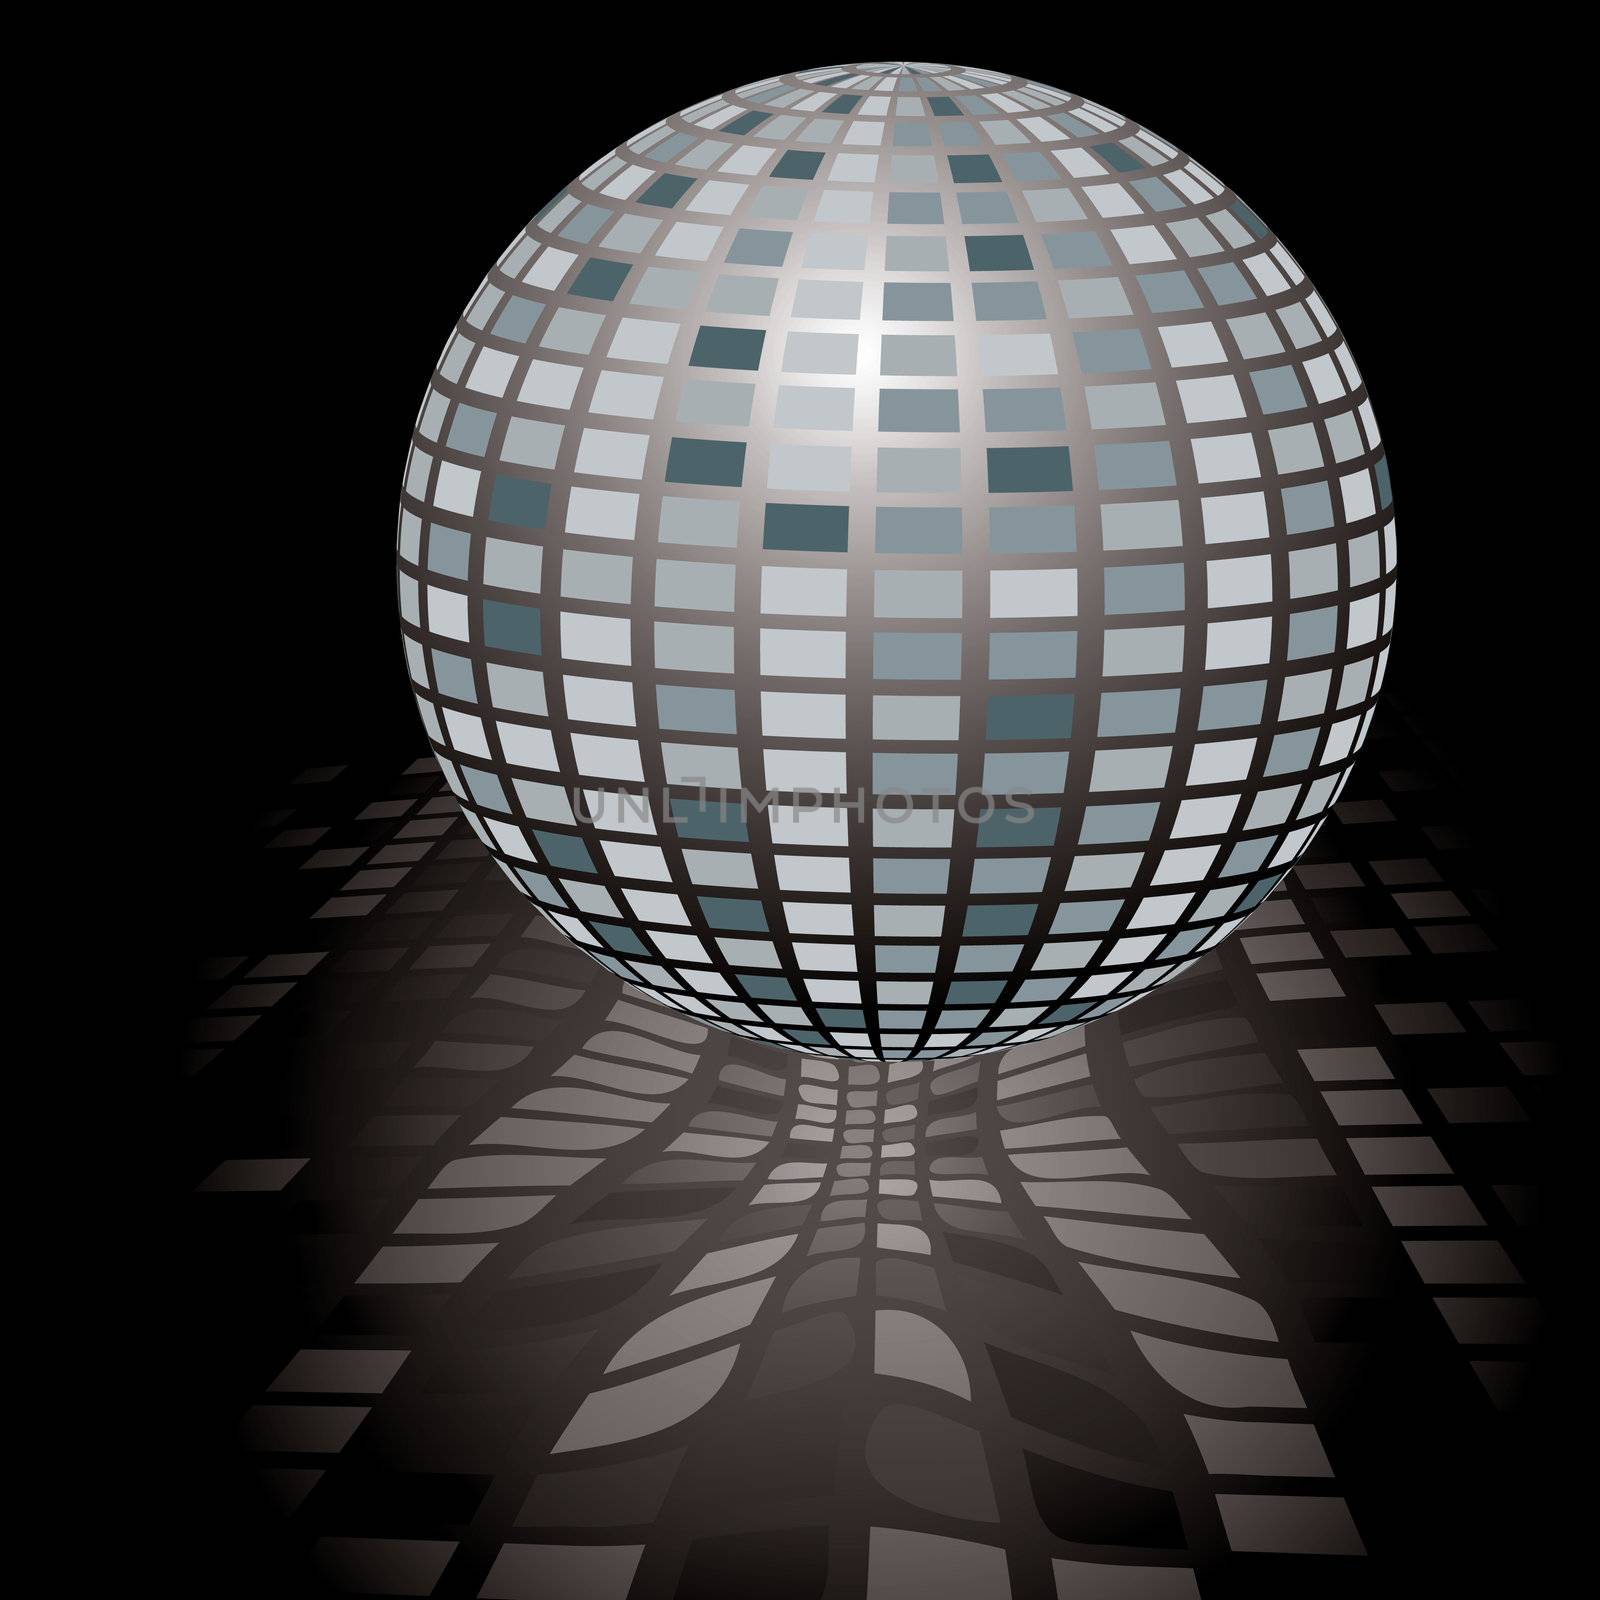 disco ball by nicemonkey